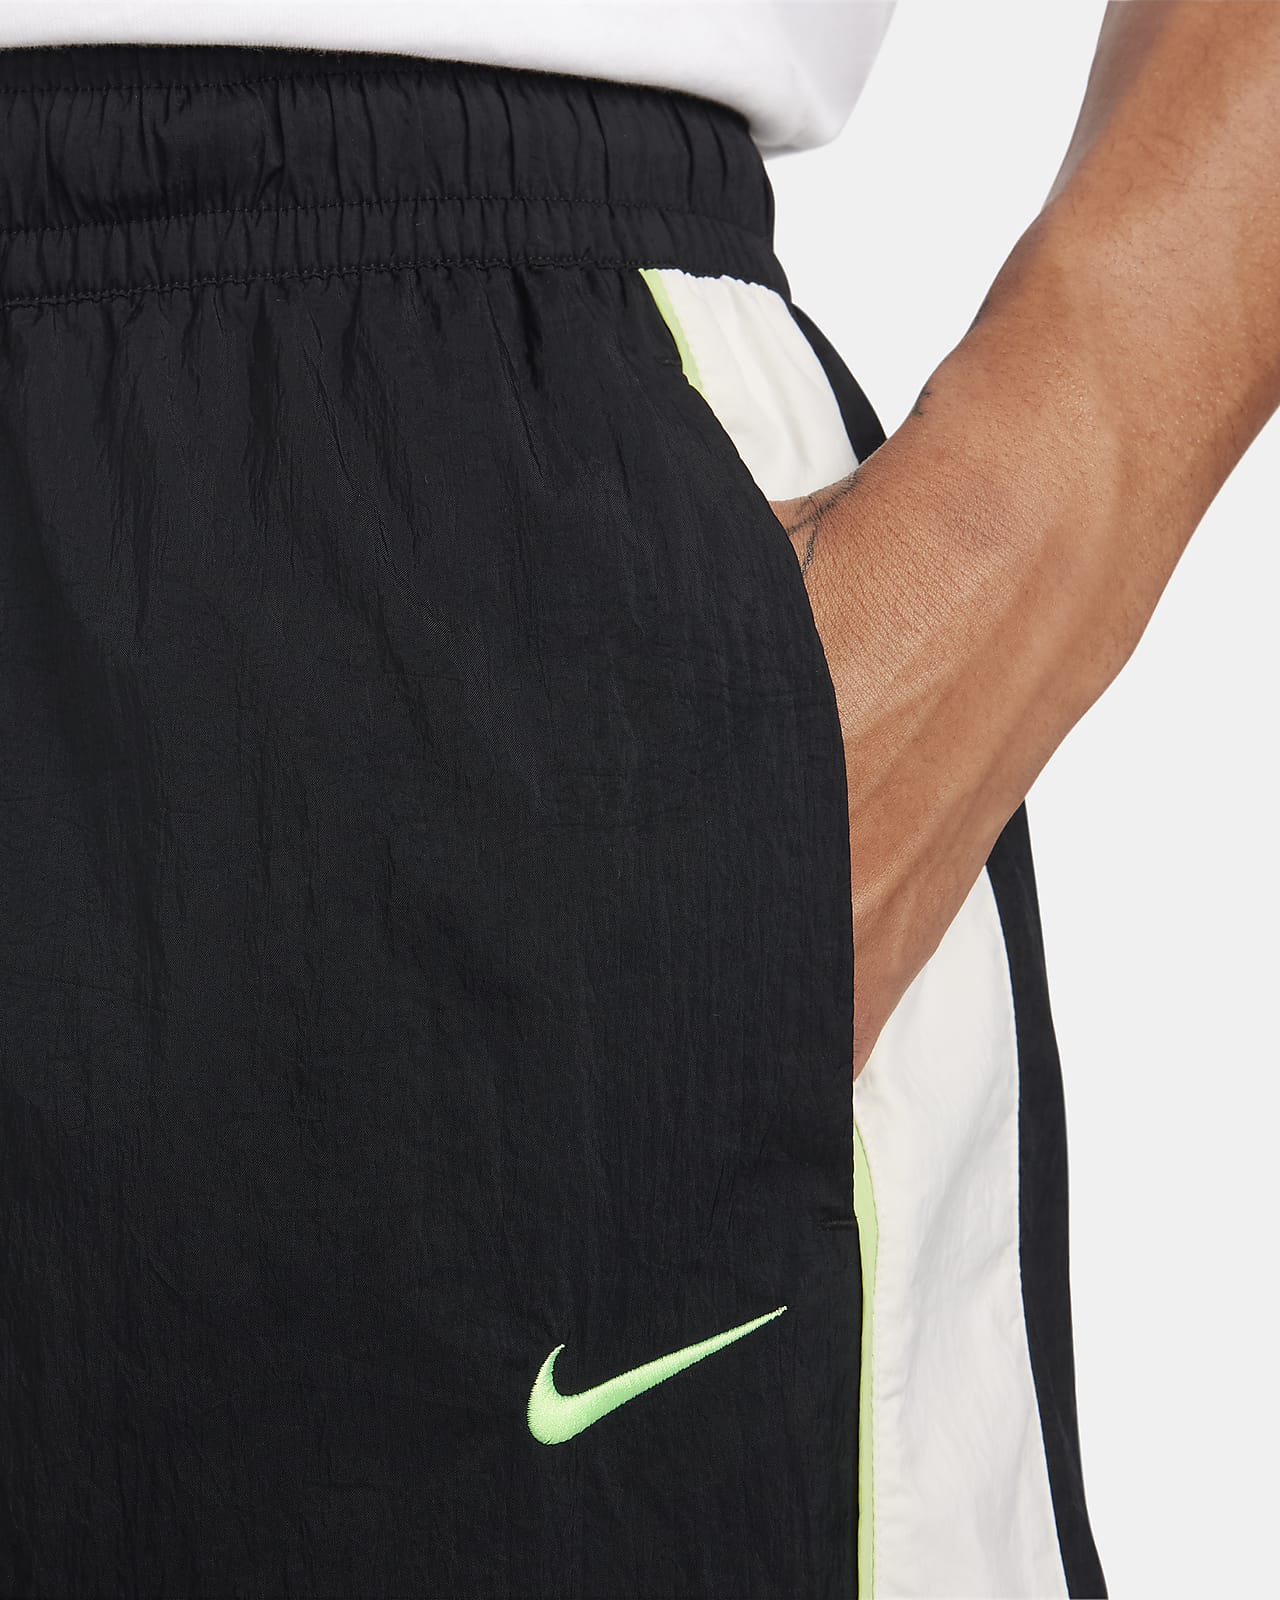 FOG x Nike NBA Tear Away Pants – The Wicker Bee